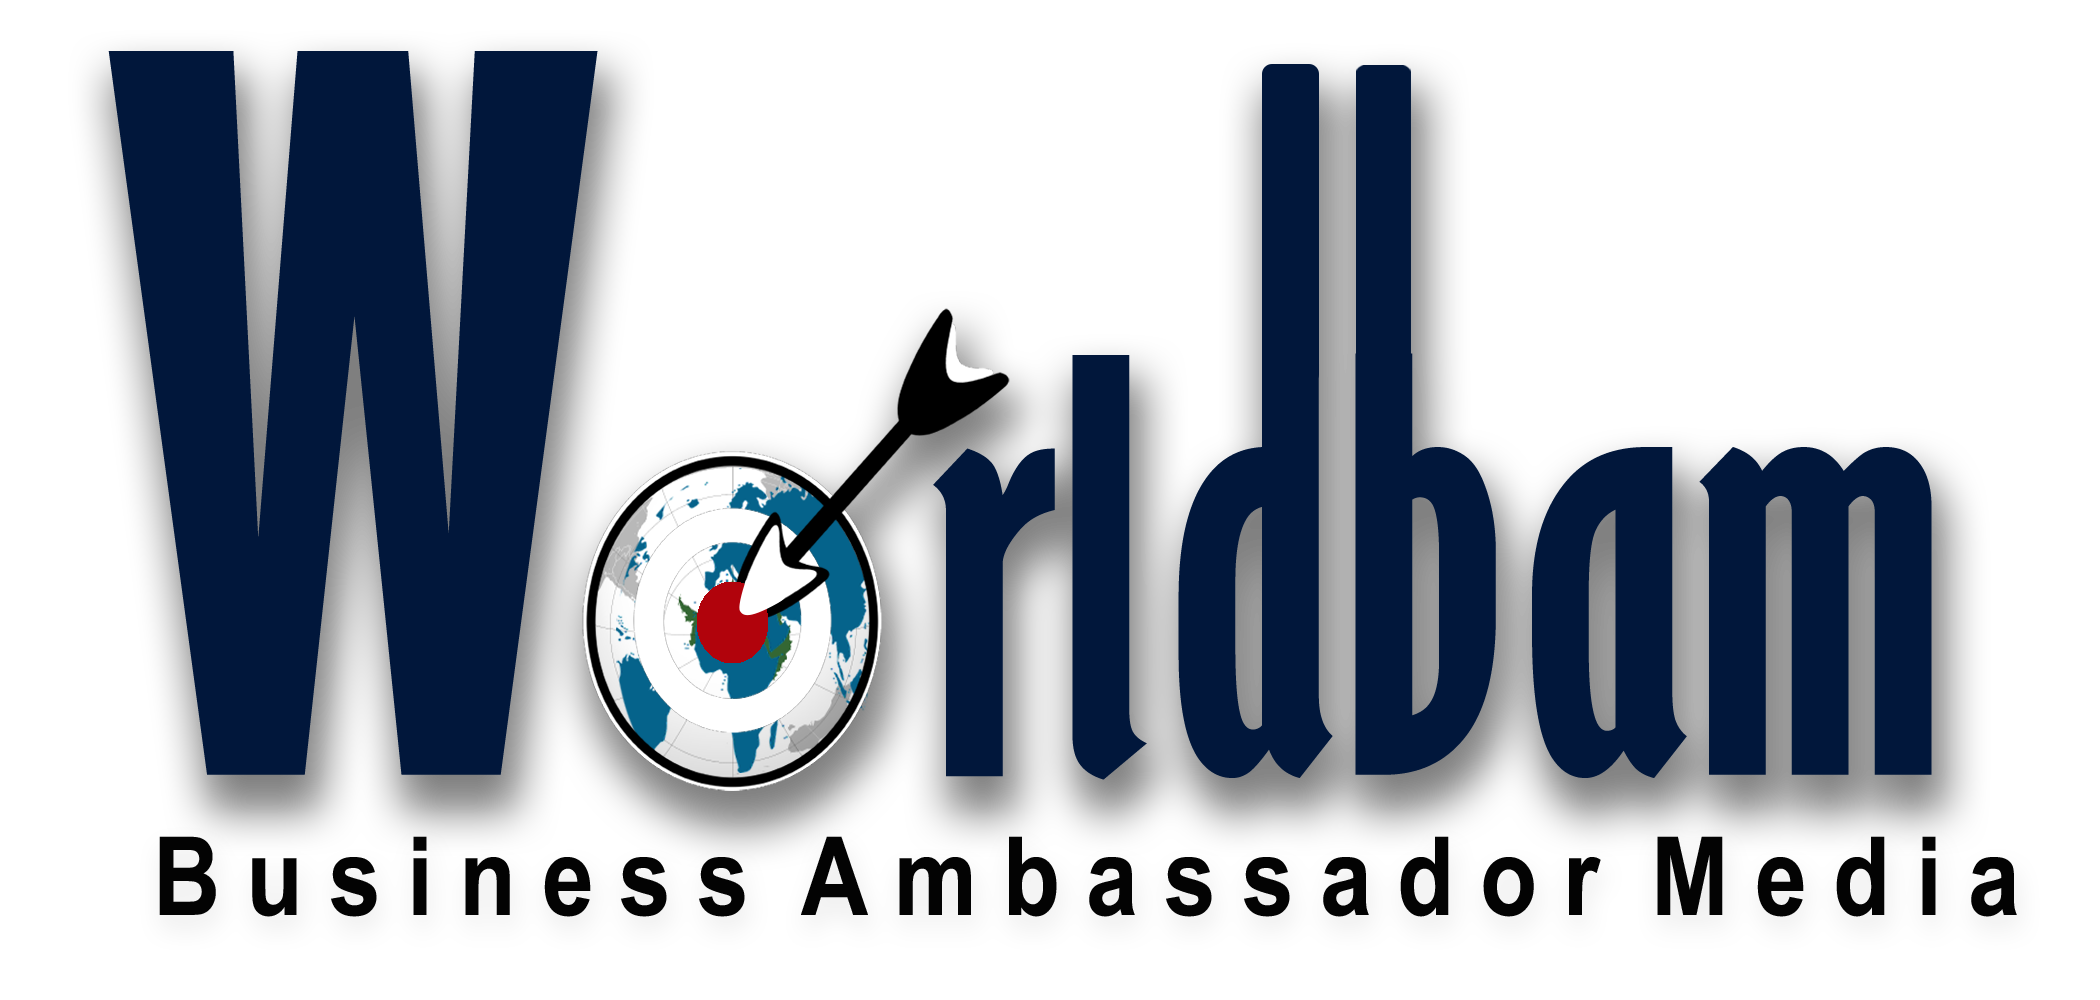 Worldbam co.,Ltd